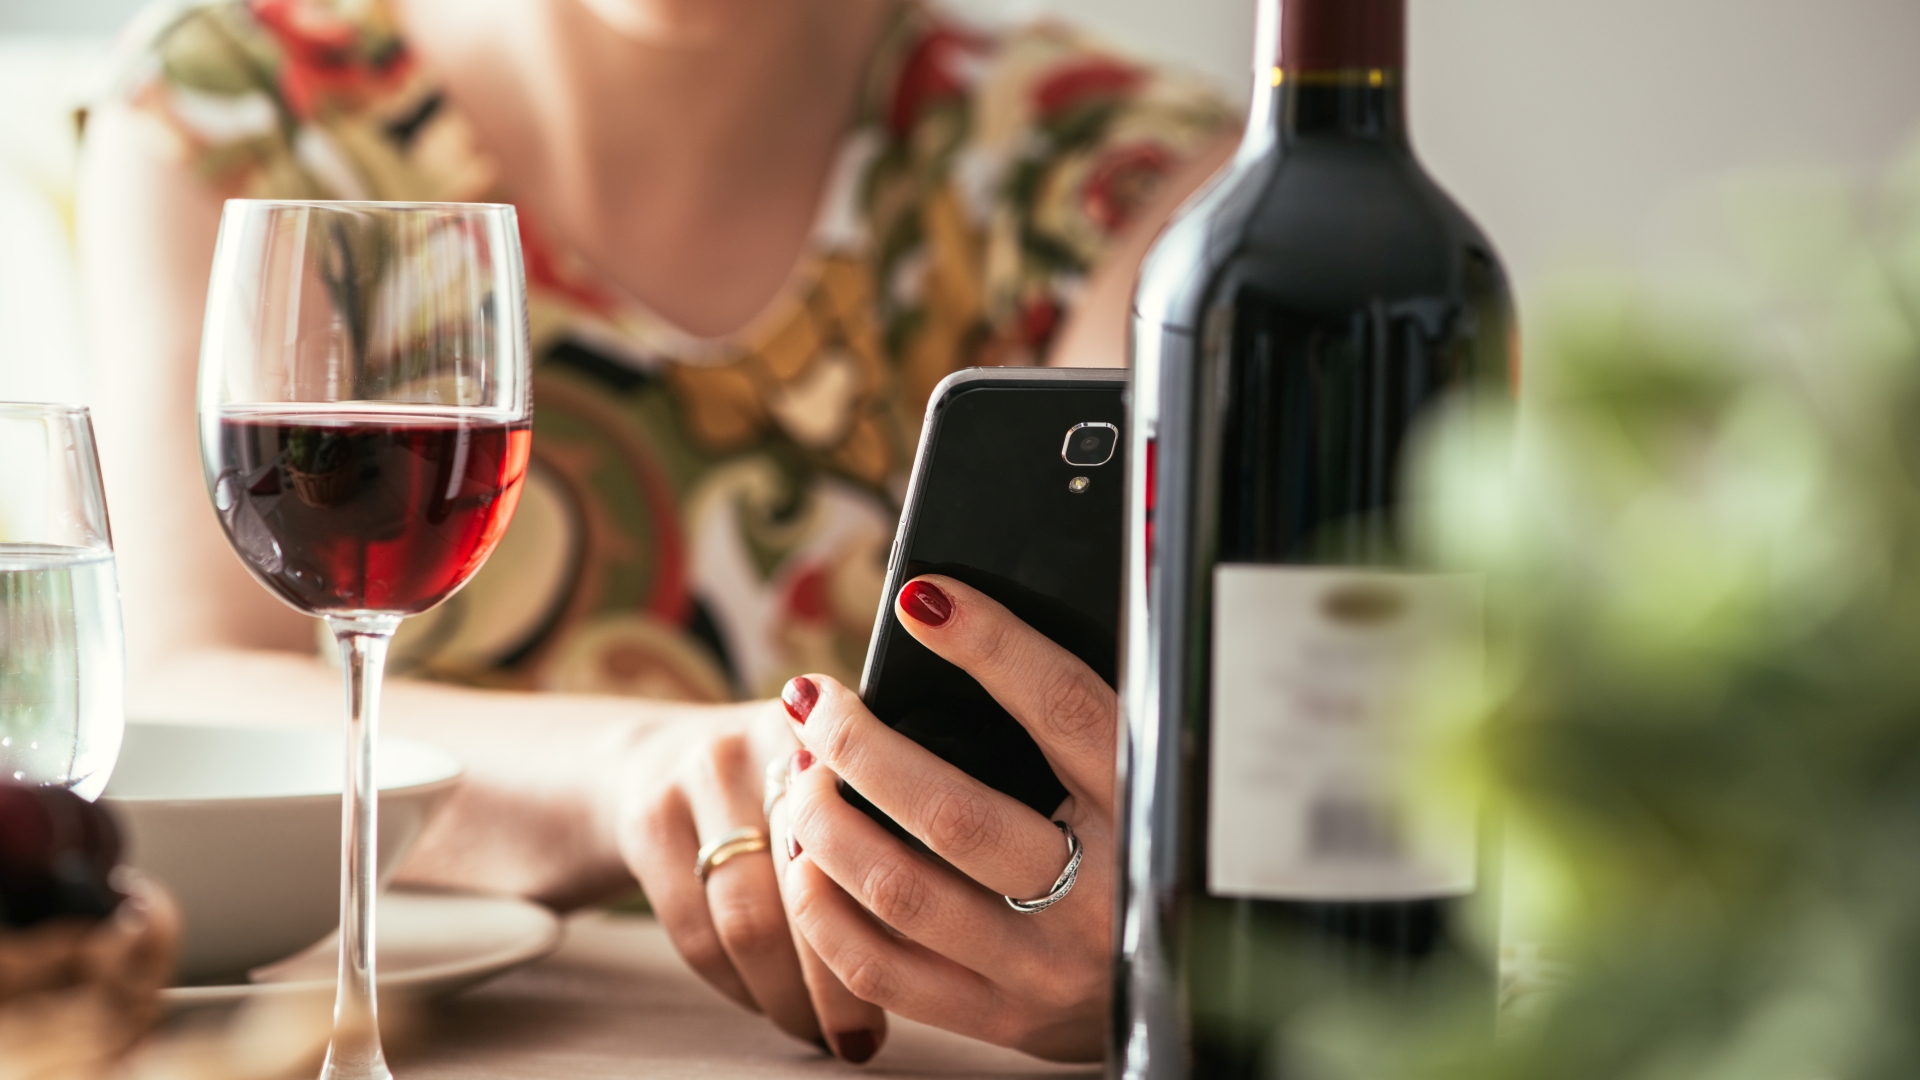 Restaurant, Smartphone, Wine